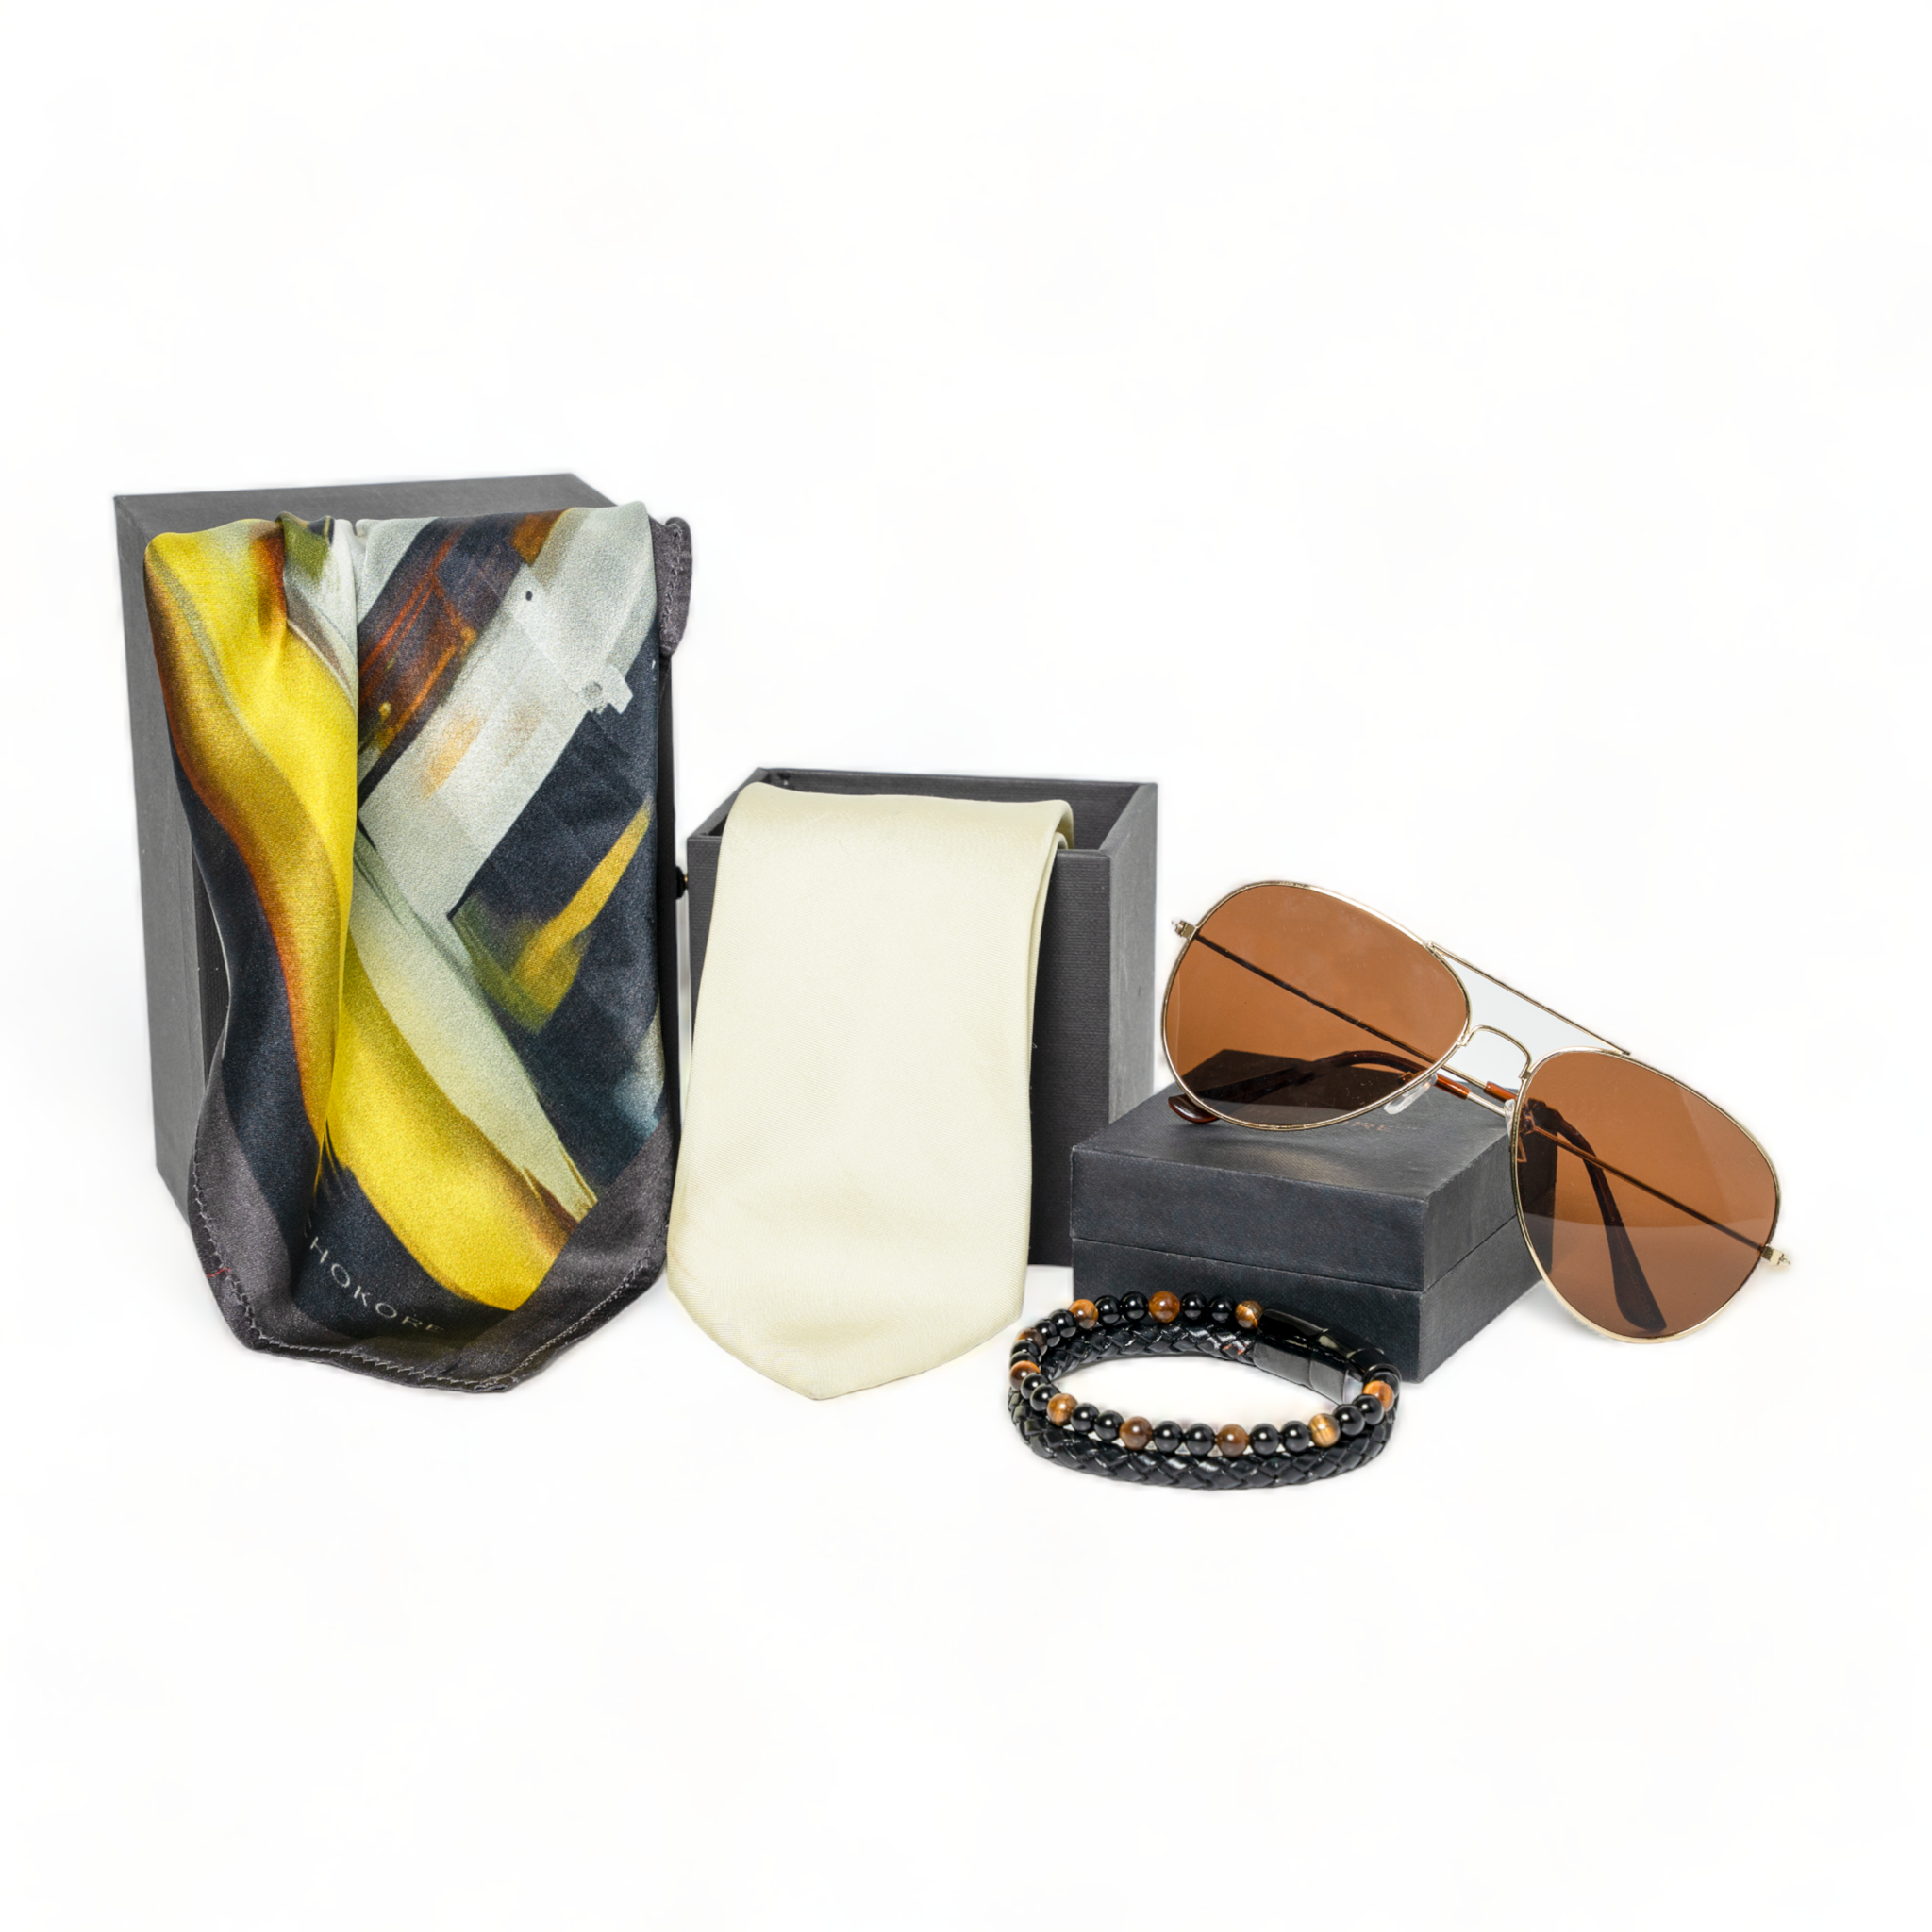 Chokore Special 4-in-1 Gift Set for Him (Pocket Square, Necktie, Sunglasses, & Bracelet)